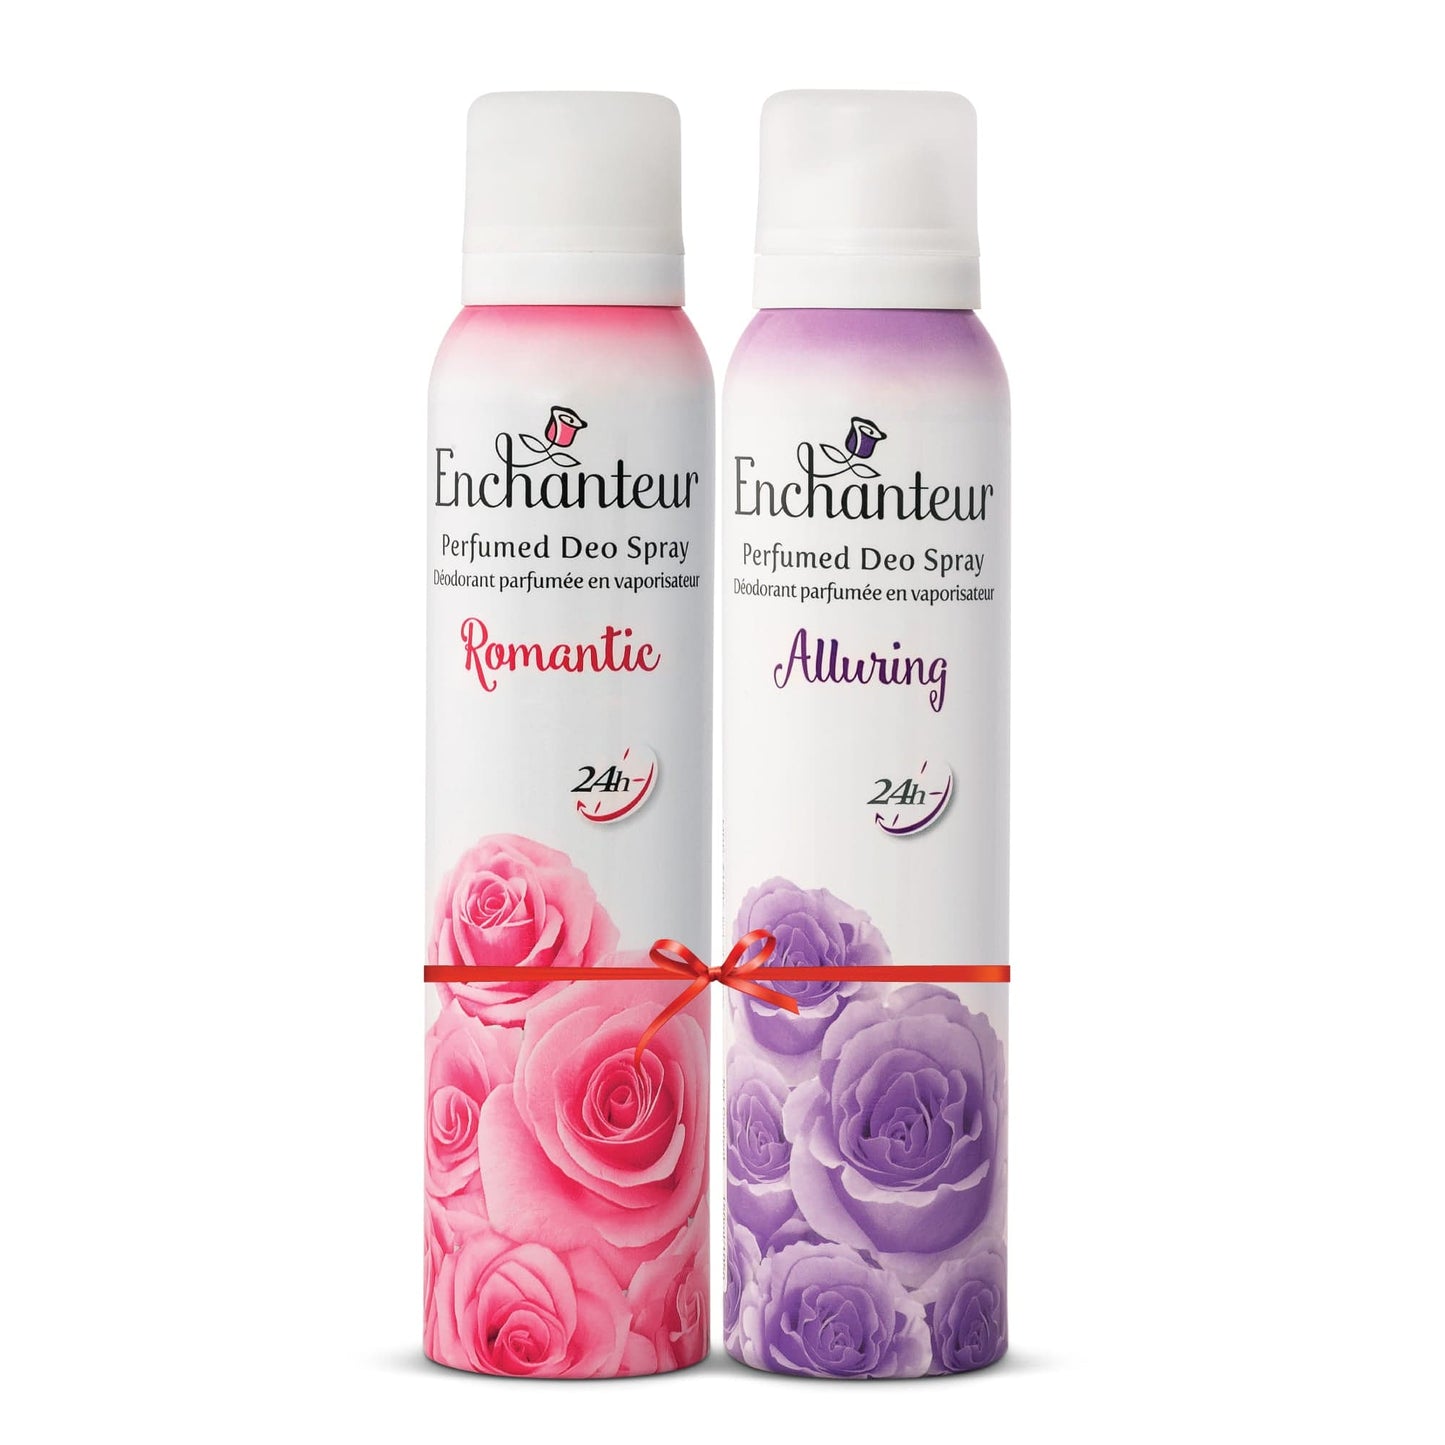 Enchanteur Romantic and Alluring Perfumed Deo Spray, 150ml each